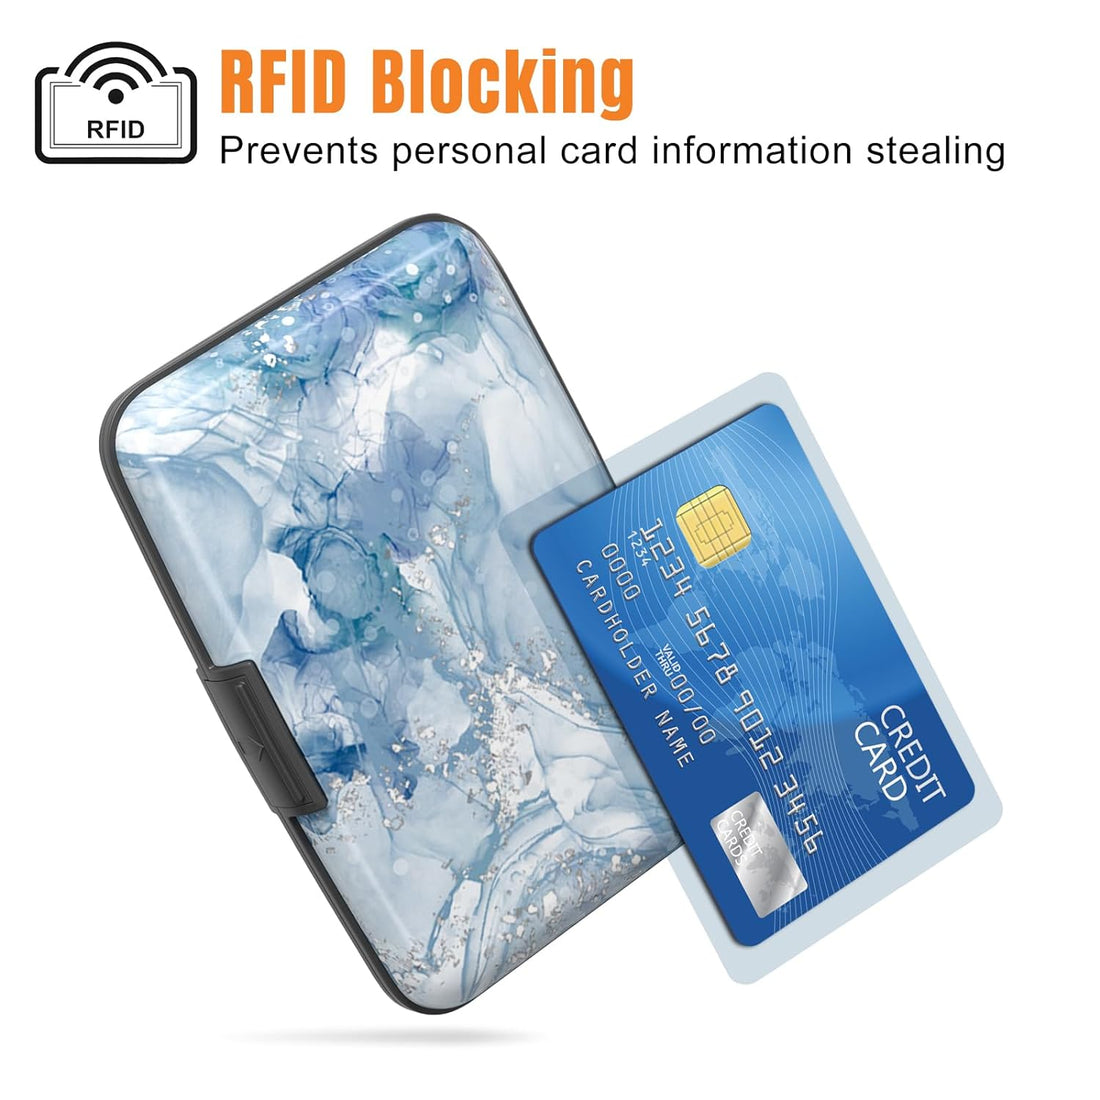 Rimilak Aluminuml Credit Card Holder, Mini Credit Card Wallet RFID Blocking Slim Metal Hard Case for Women Men, Blue Mable, S